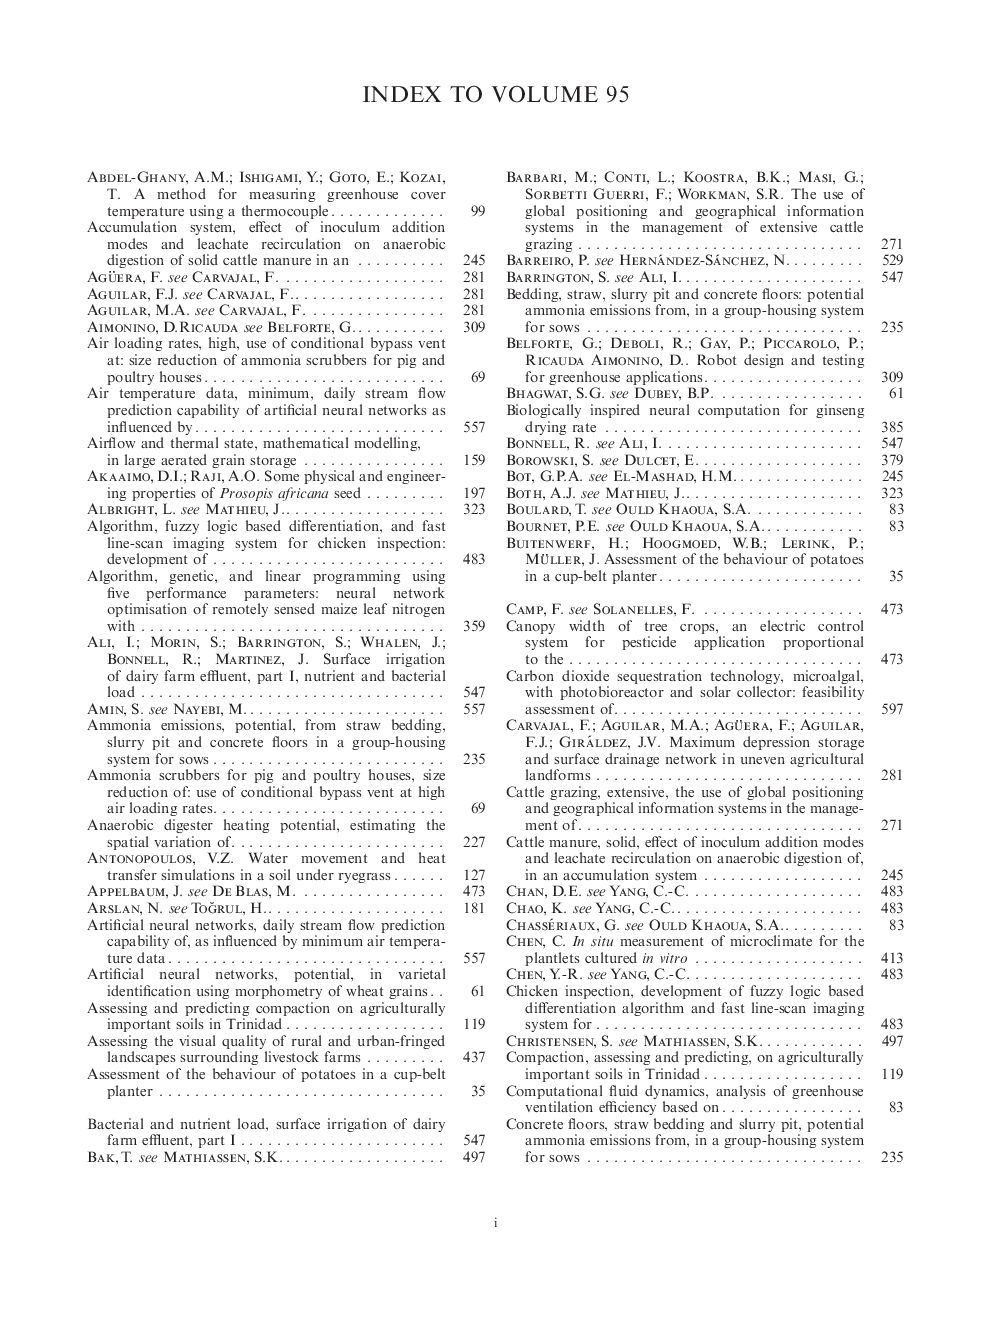 Index to Volume 95